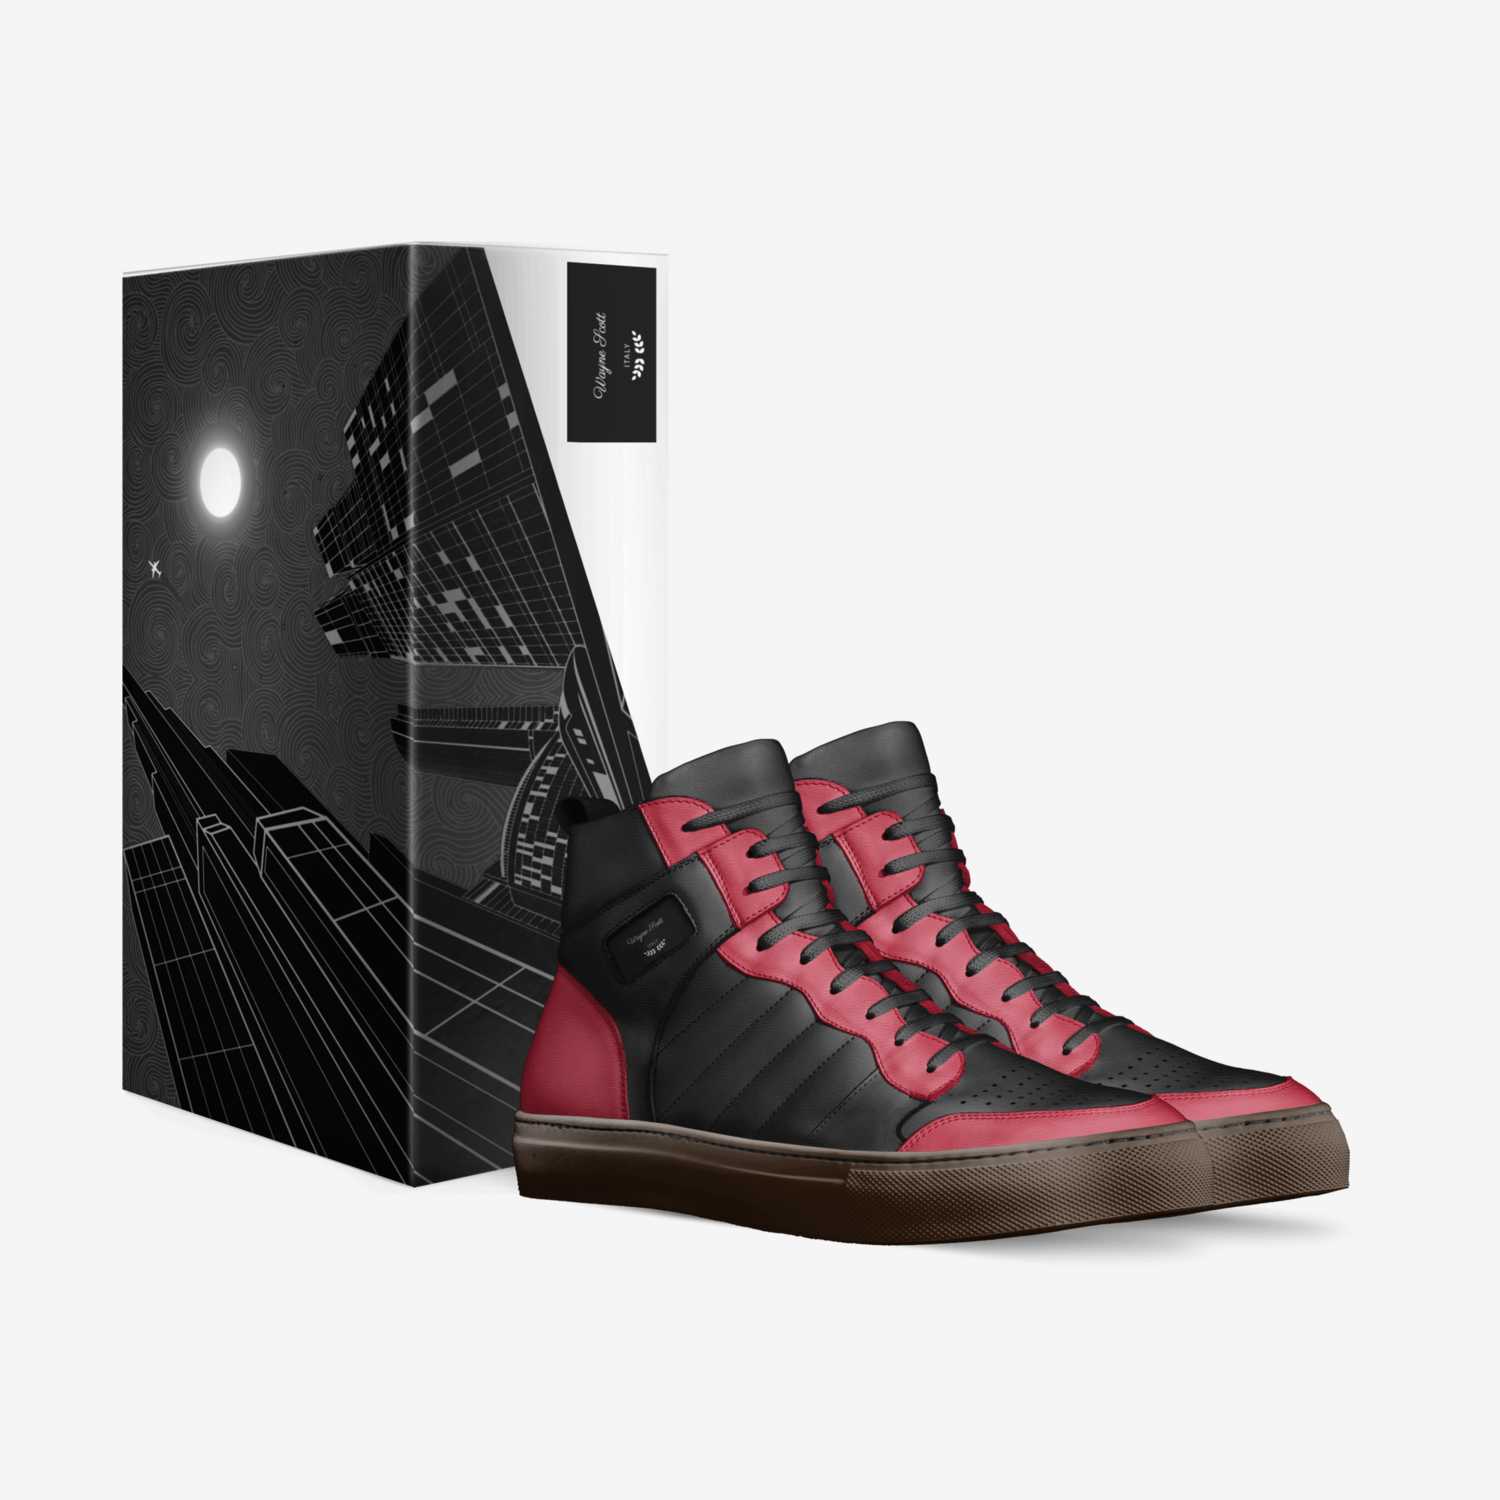 Wayne Scott  custom made in Italy shoes by Wayne Cannady | Box view